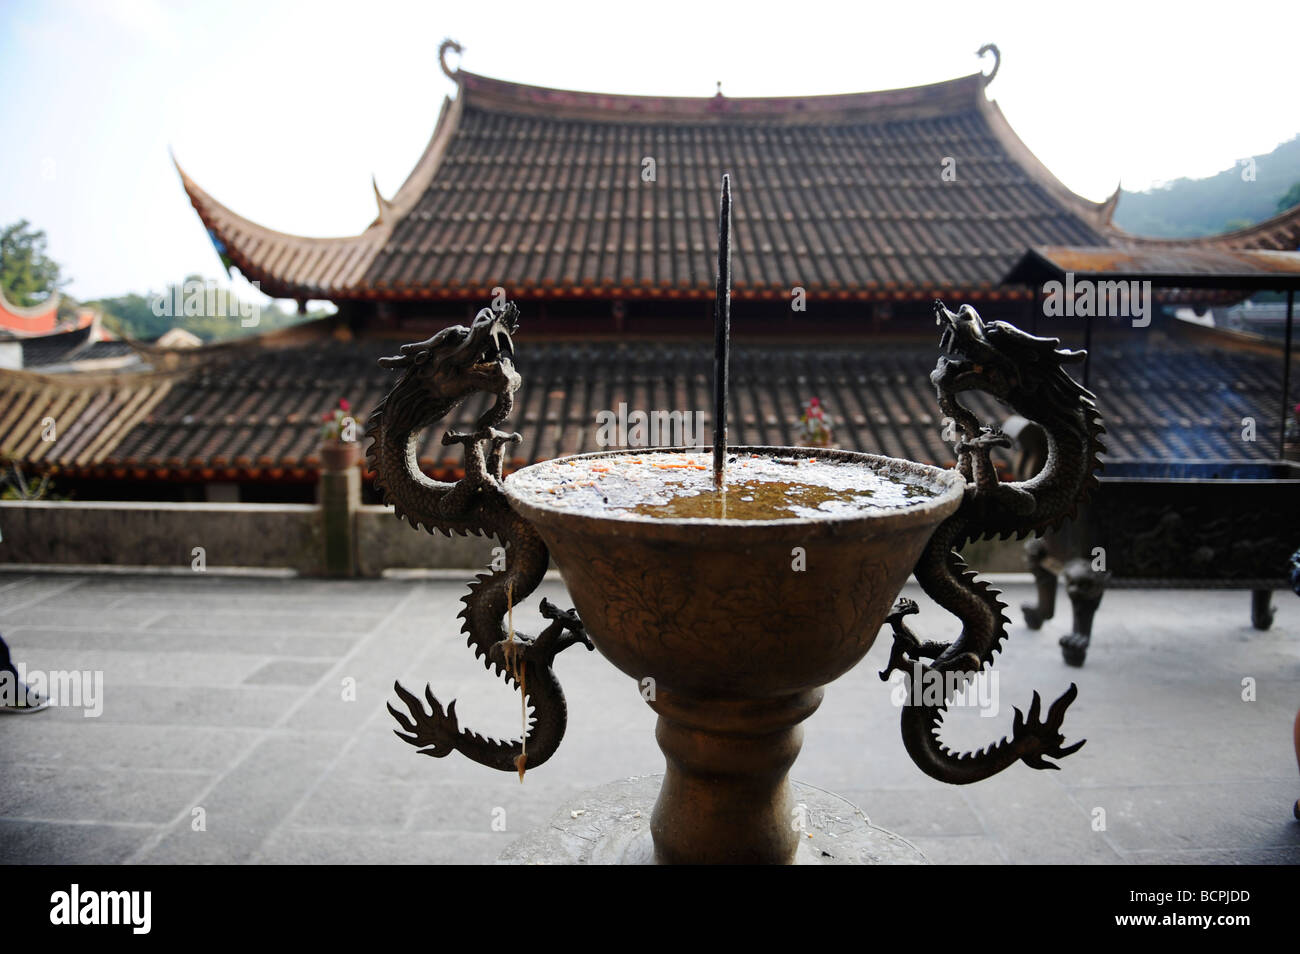 Tiled roof of The Mahavira Palace and candle holder, Gushan Yongquan Temple, Fuzhou, Fujian Province, China Stock Photo